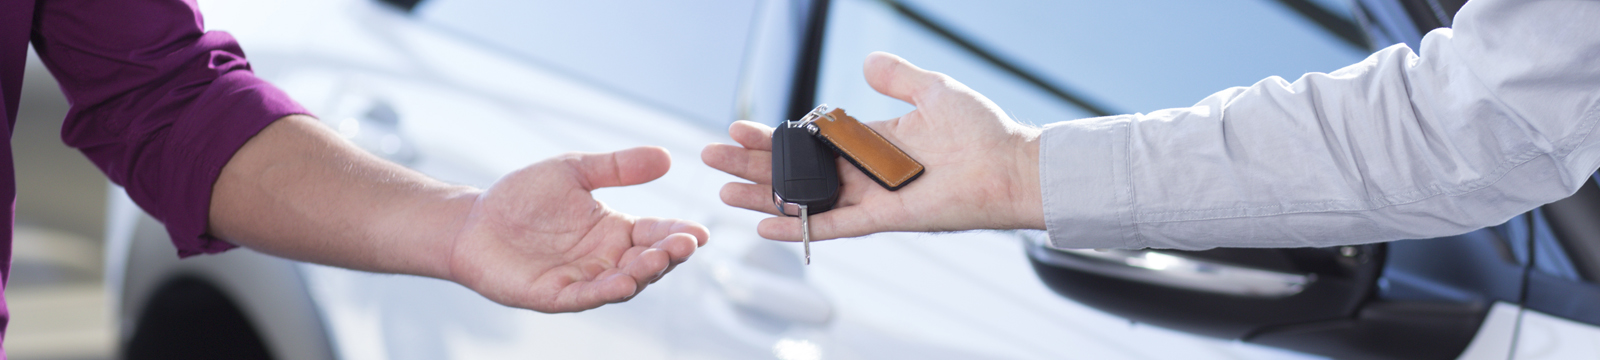 New car buyer receiving keys.